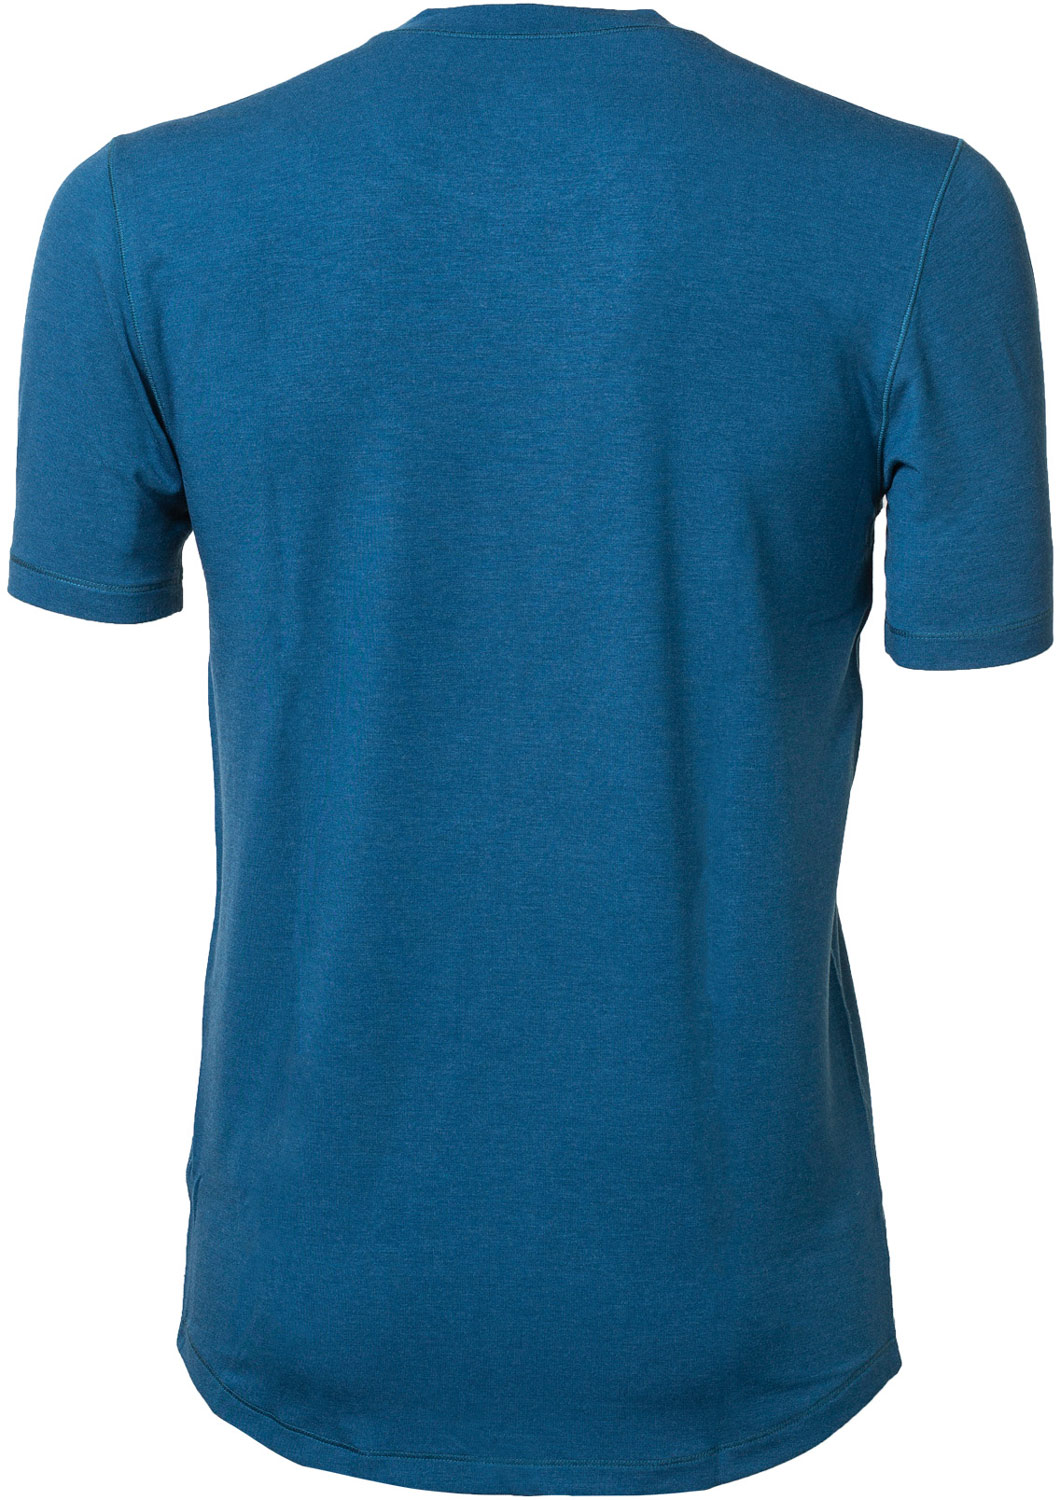 Men's short sleeve functional T-shirt